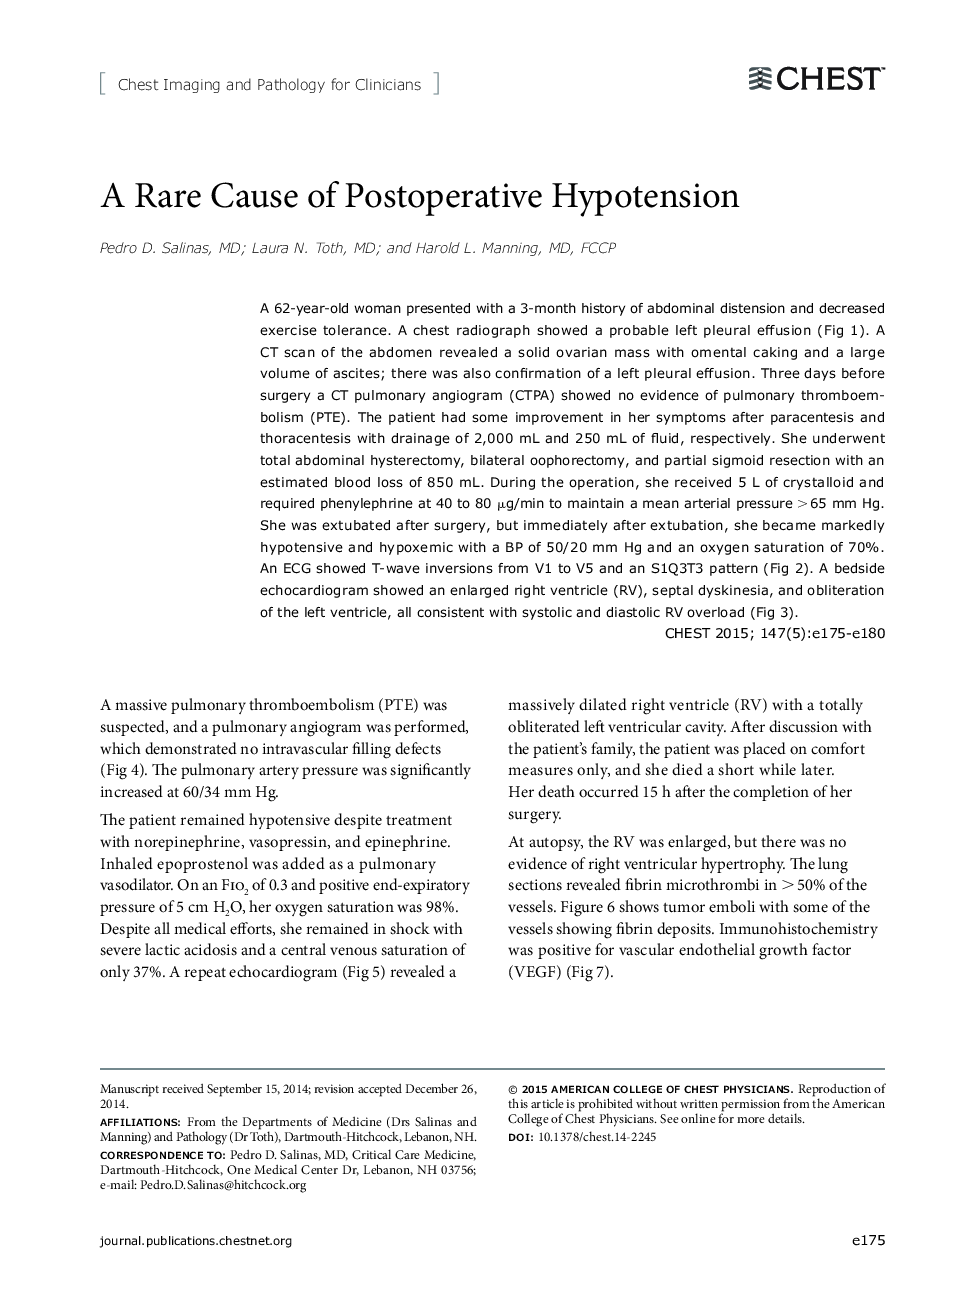 A Rare Cause of Postoperative Hypotension